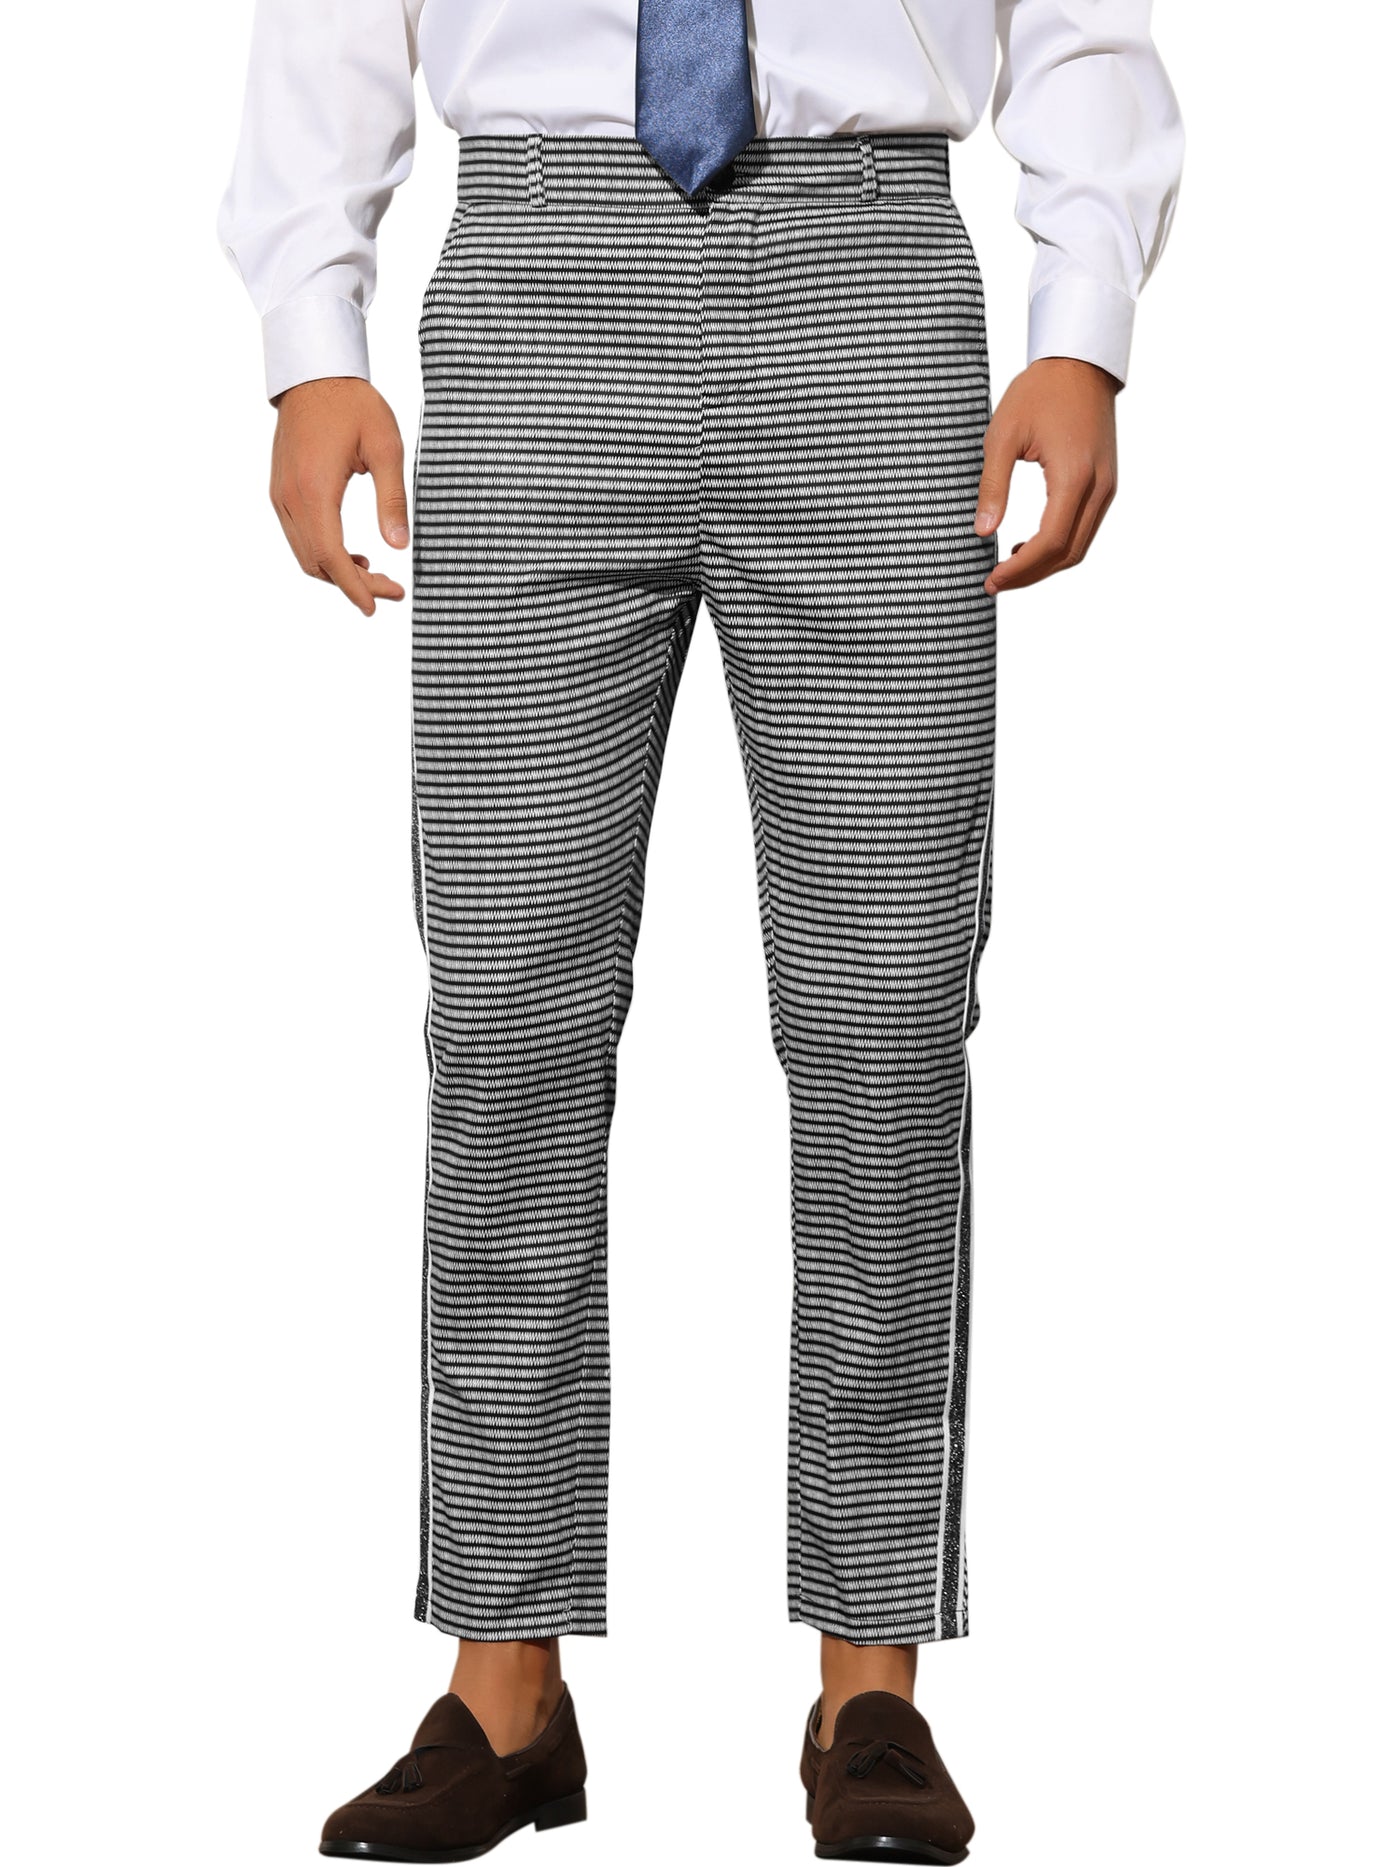 Bublédon Printed Dress Pants for Men's Slim Fit Flat Front Pattern Formal Trousers